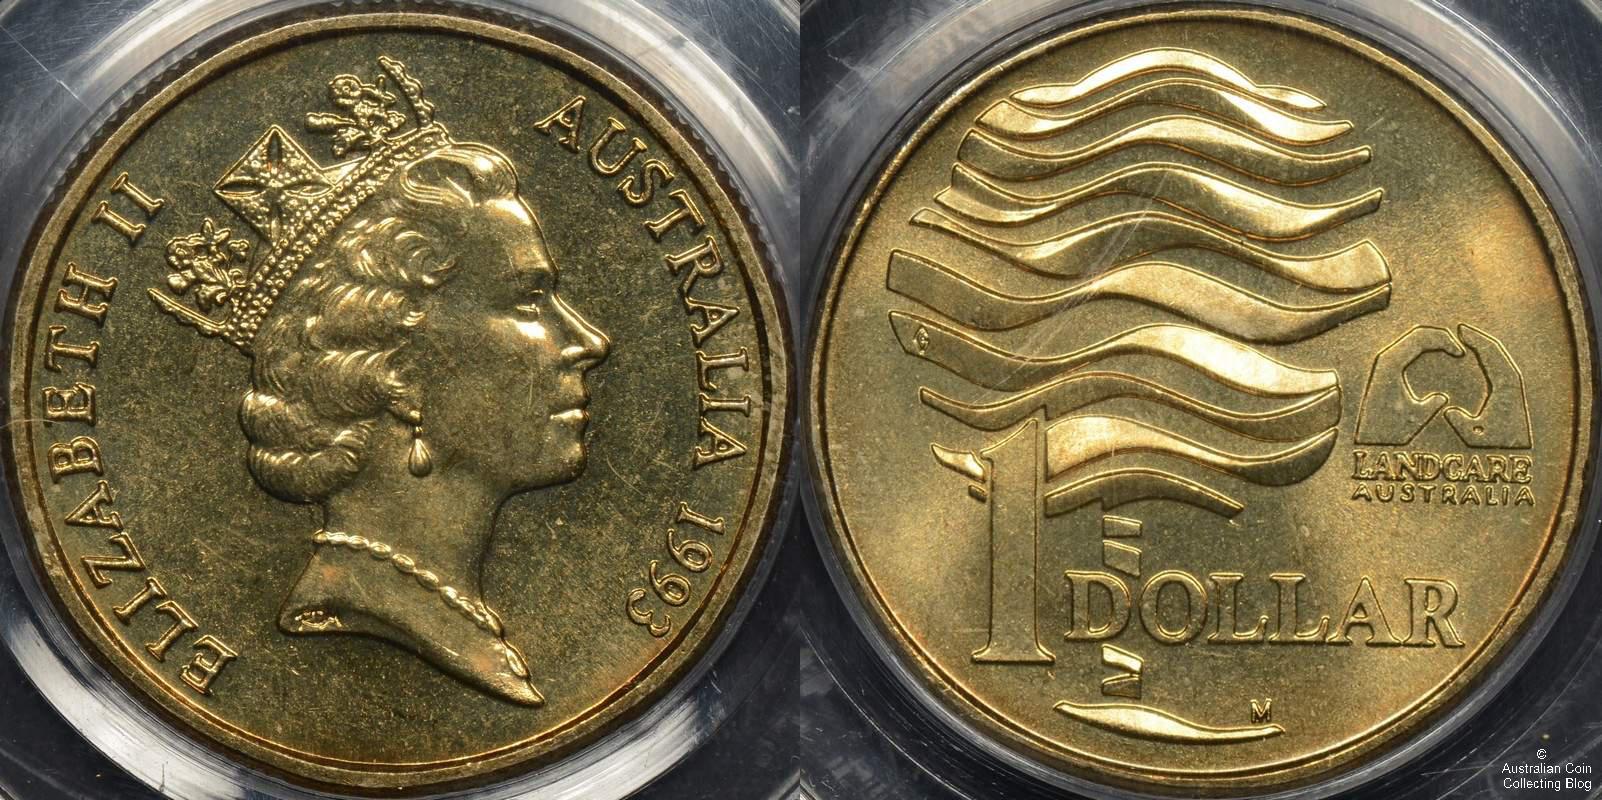 1991 Mint Sets Australia 1993 & 1995.